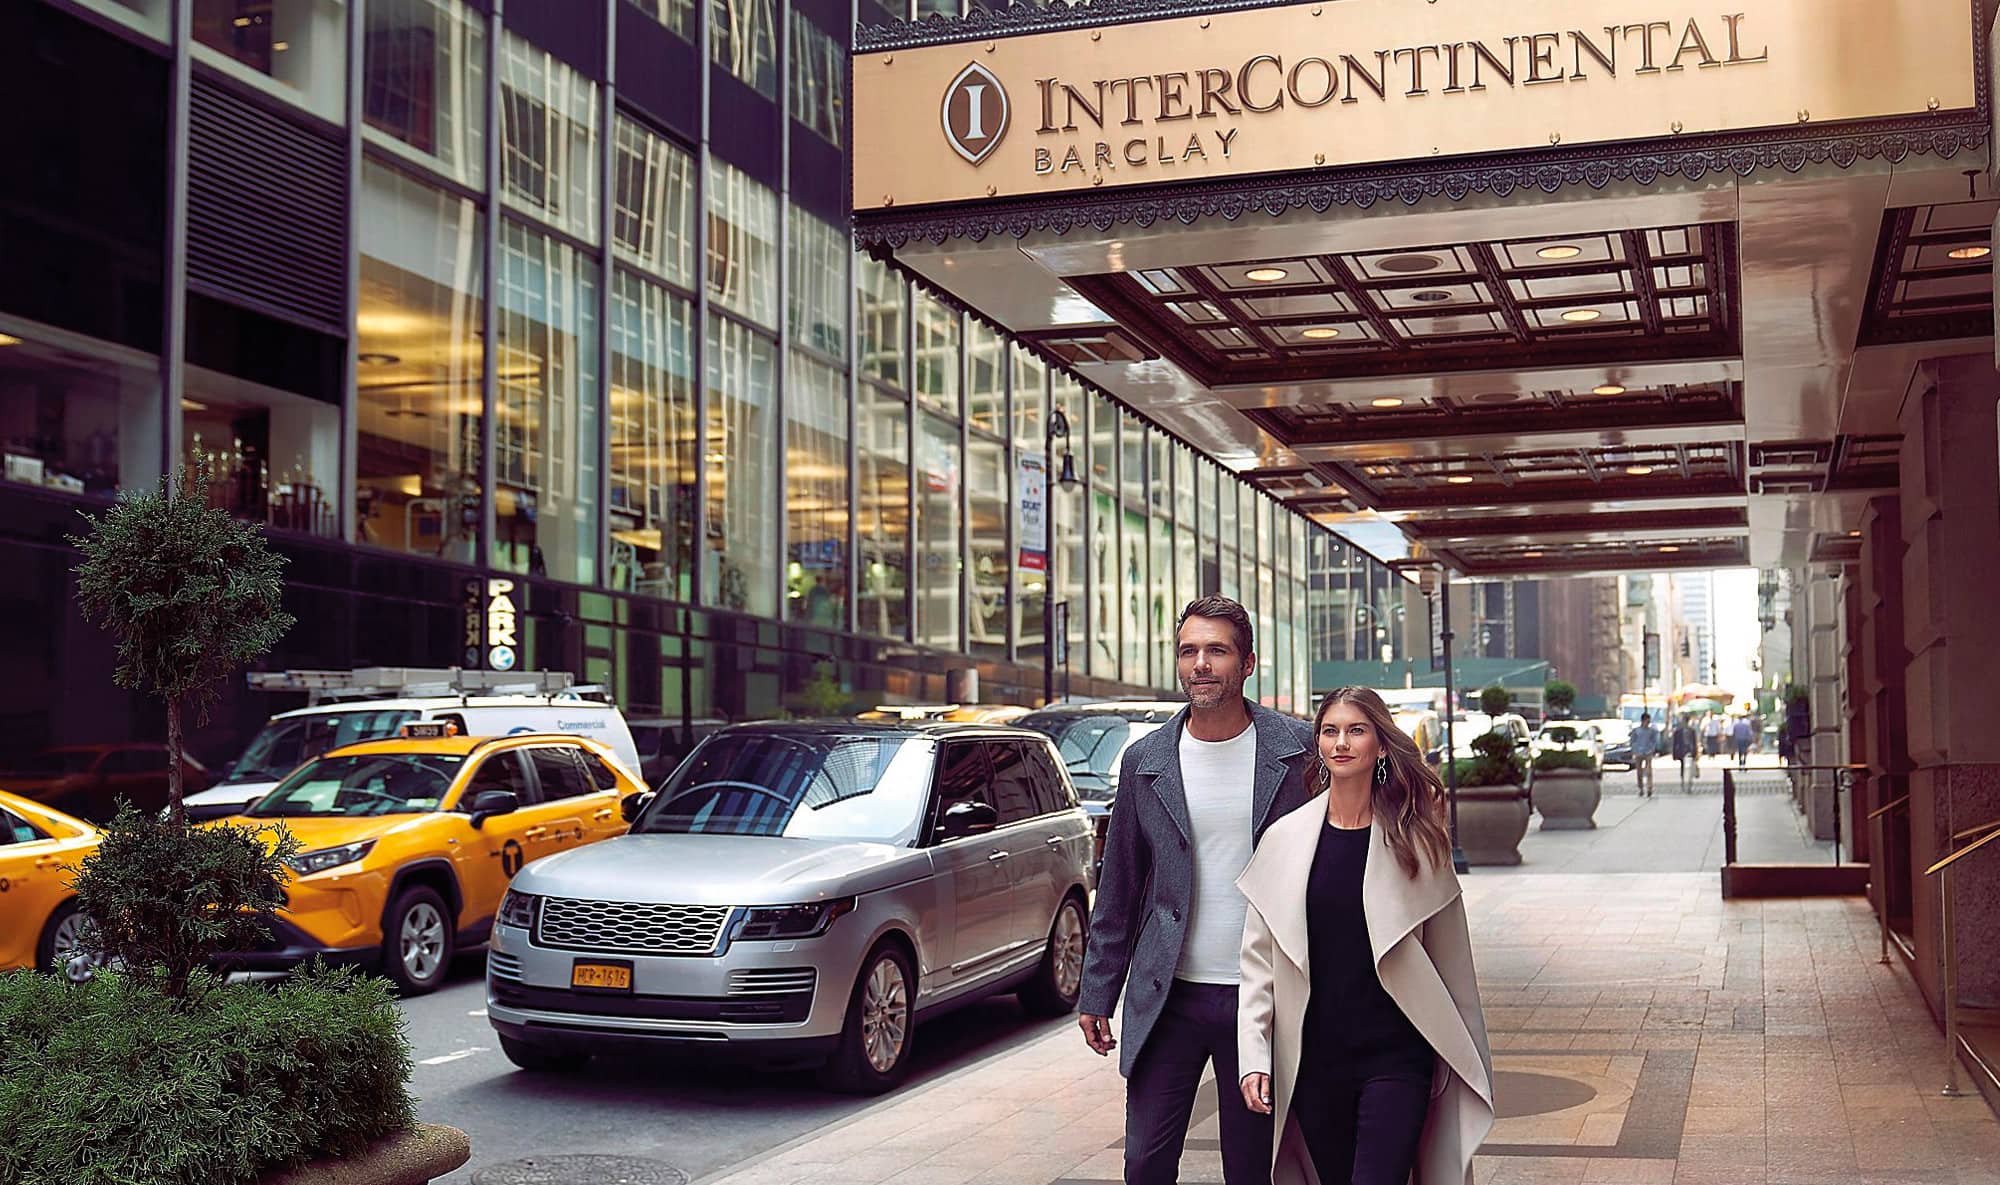 Intercontinental Hotel exterior